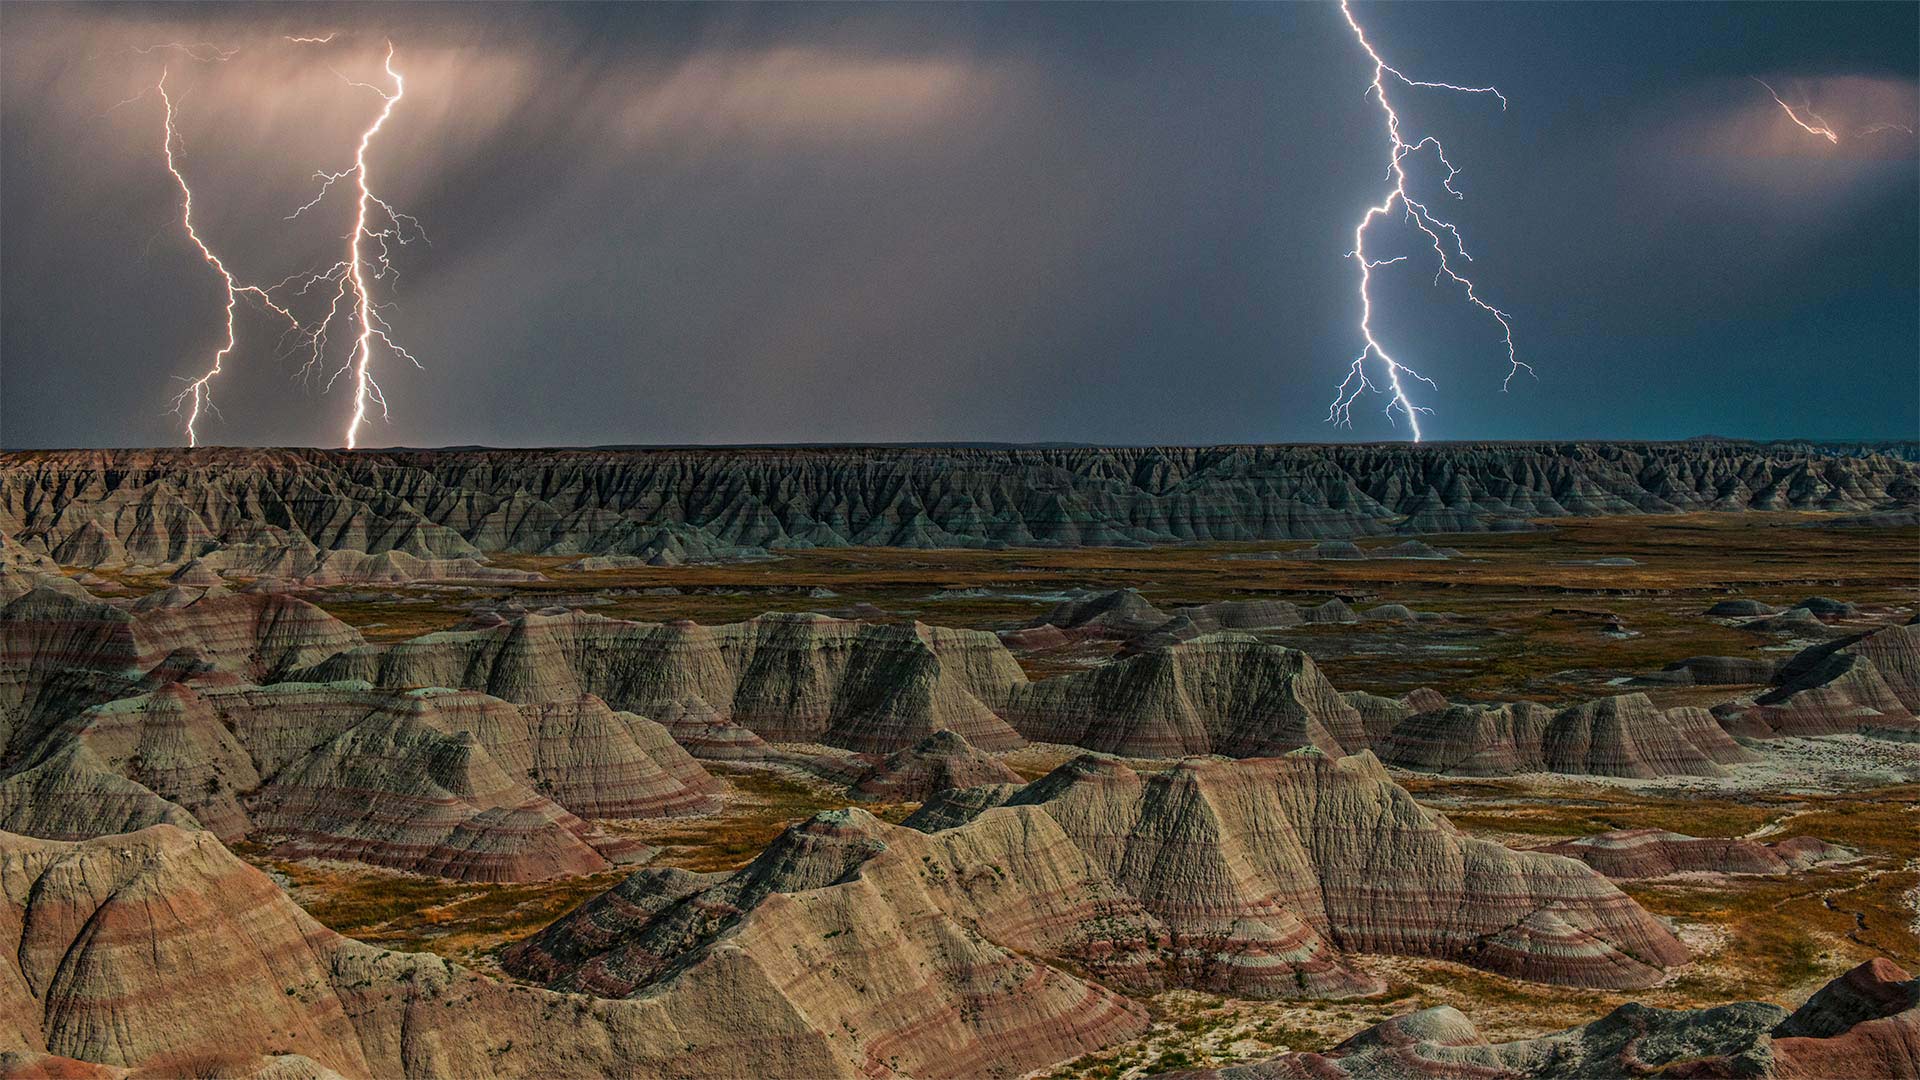 Rock formations in Badlands National Park during a lightning storm, South Dakota - DEEPOL by plainpicture)